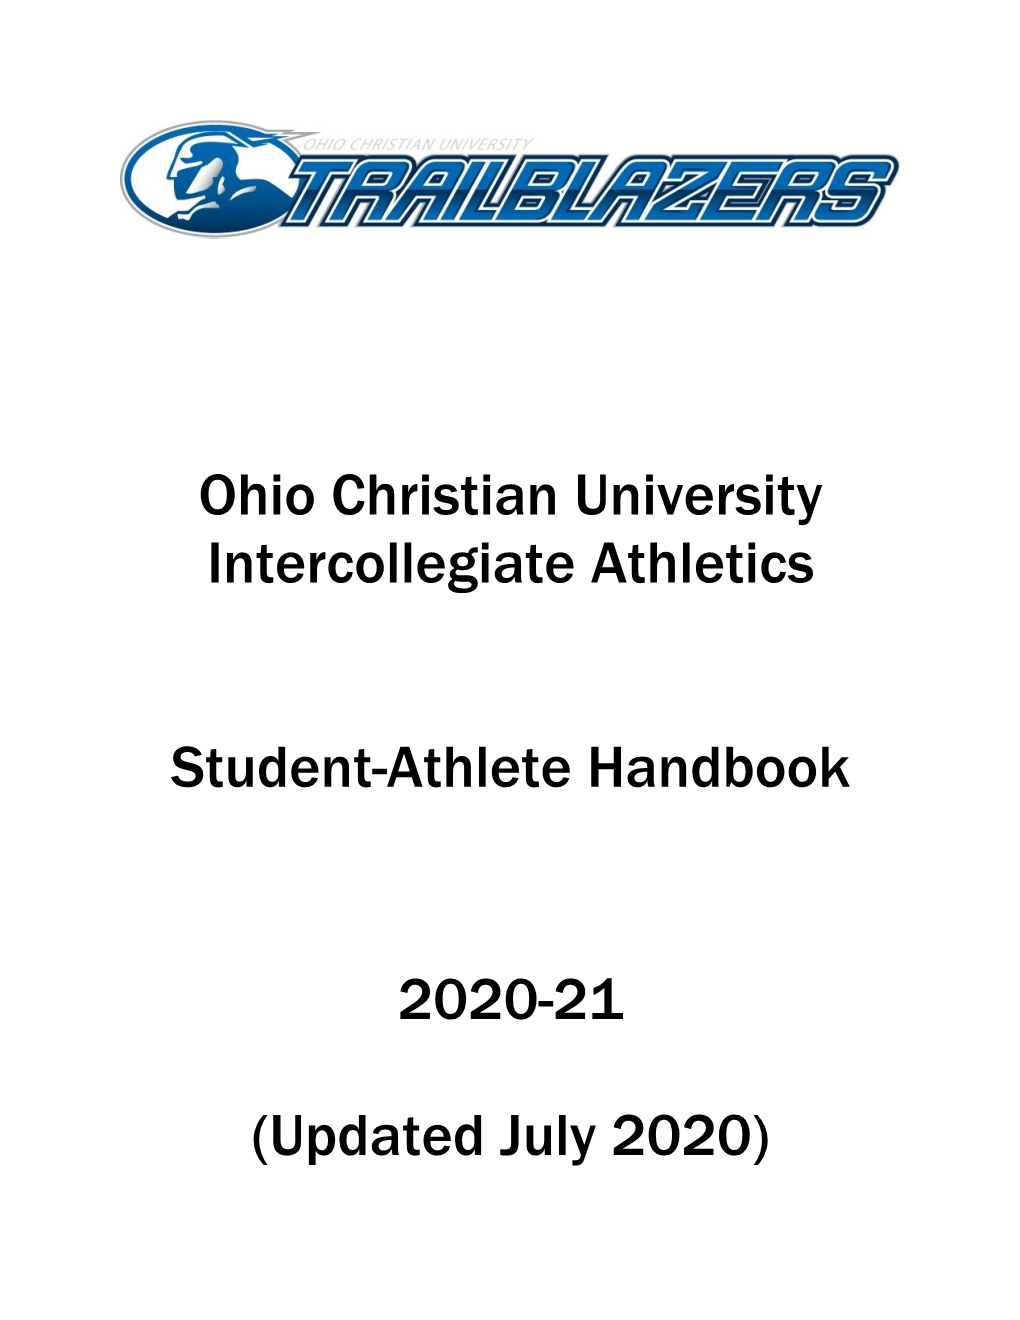 2020-21 Student Athlete Handbook